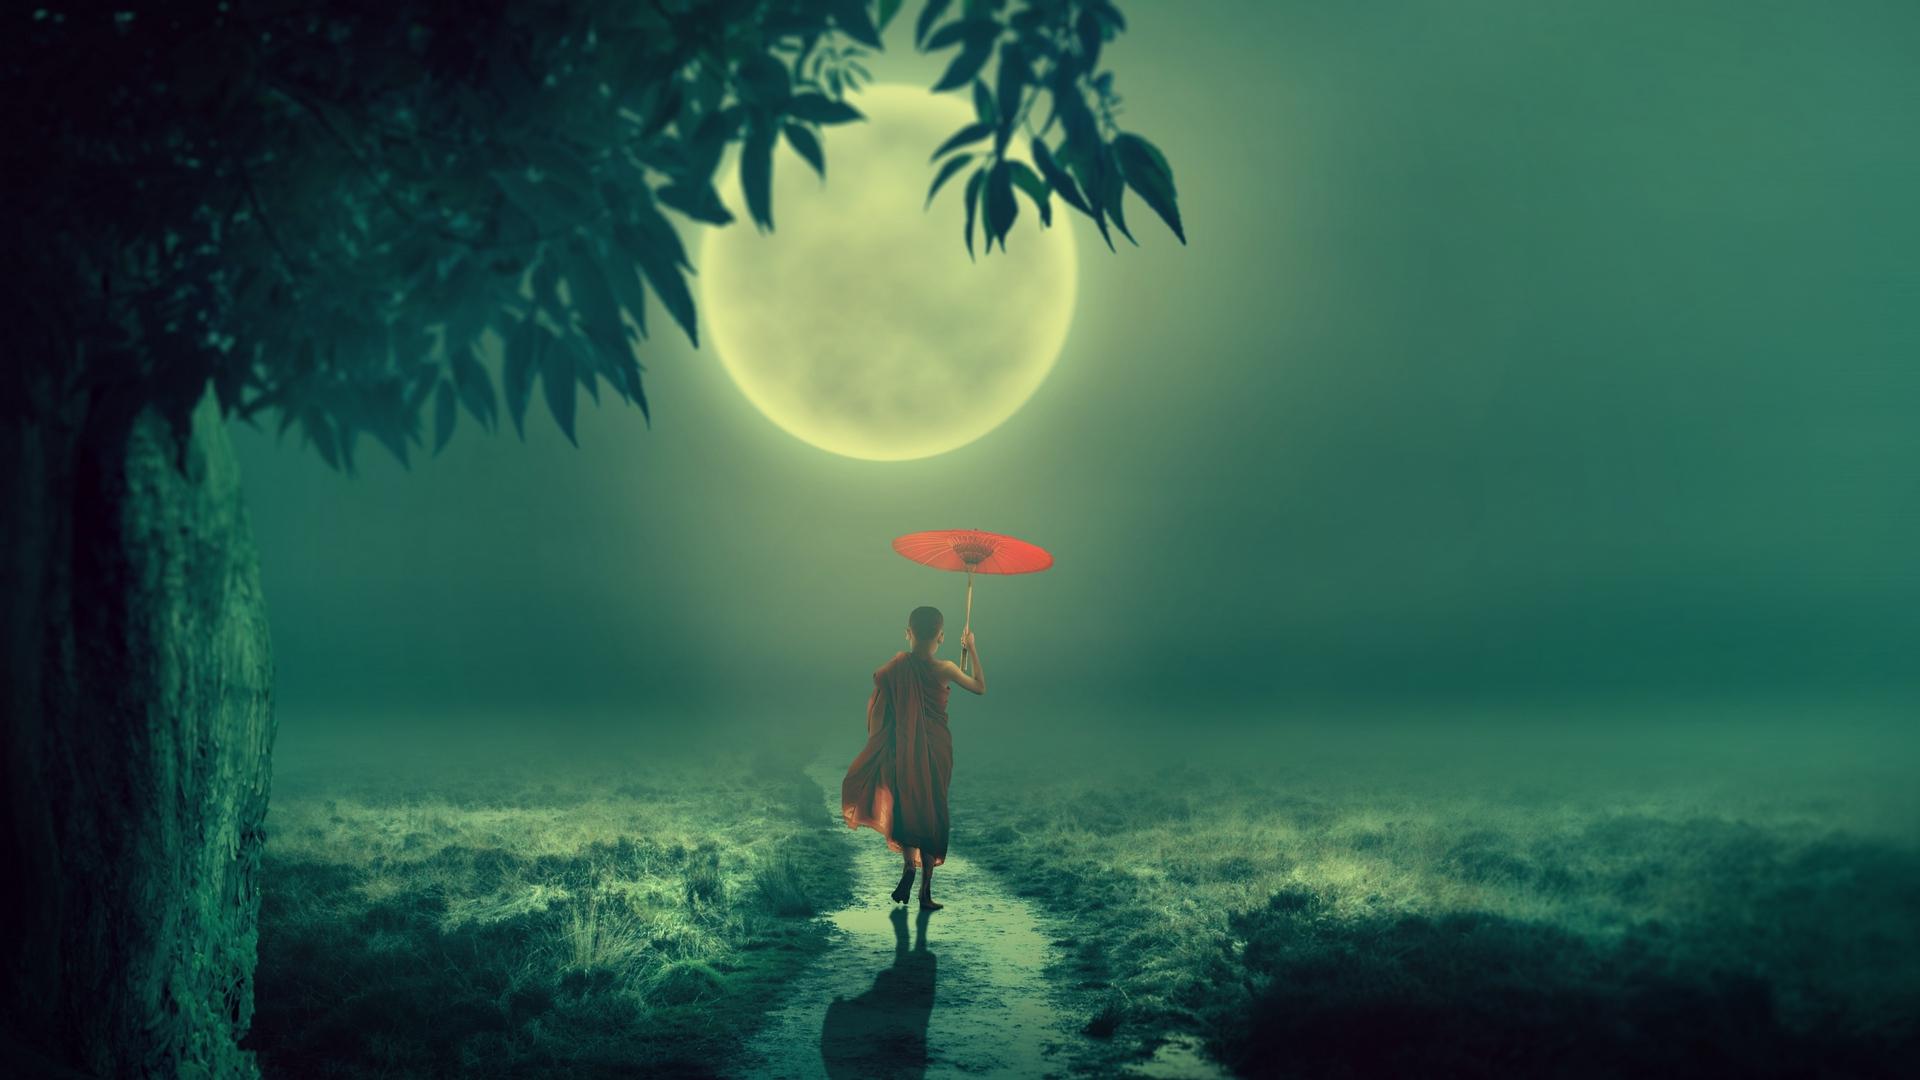 Download wallpaper 1920x1080 boy, monk, fog, moon, child, umbrella